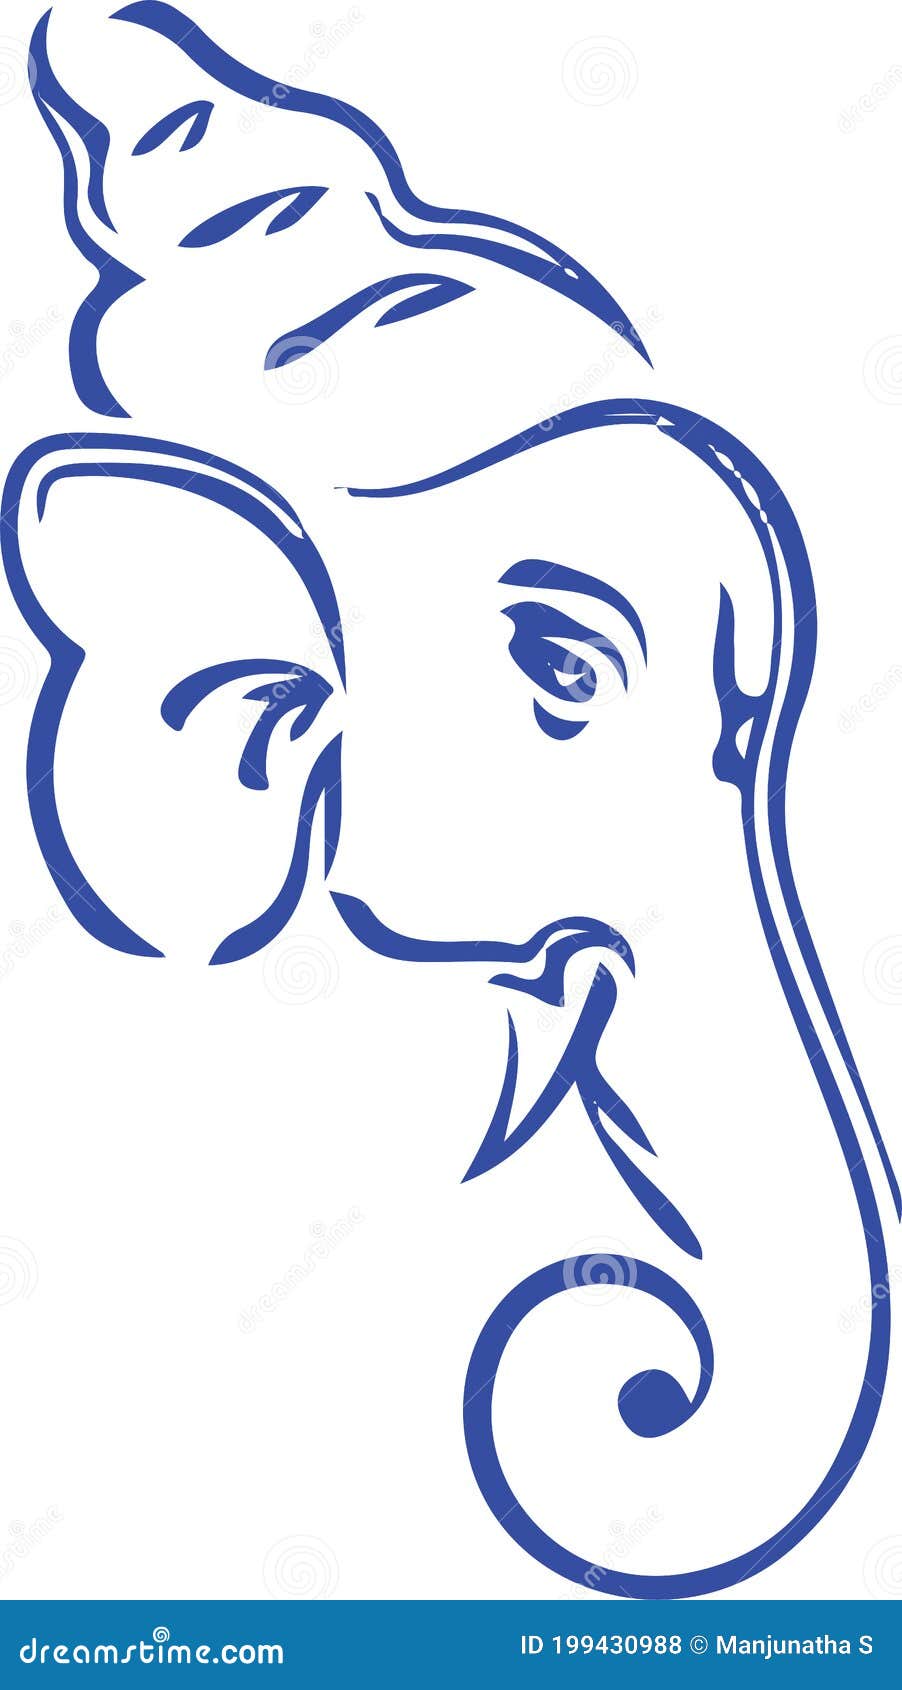 Draw So Easy Ganesha Sketch  Ganesha är snygg drawing art  Draw So Easy Ganesha  Sketch TinyprintsArt Stationary Used Drawing Sheet Black sketch pen Hb  pencil Blender Online Drawing Classes Online